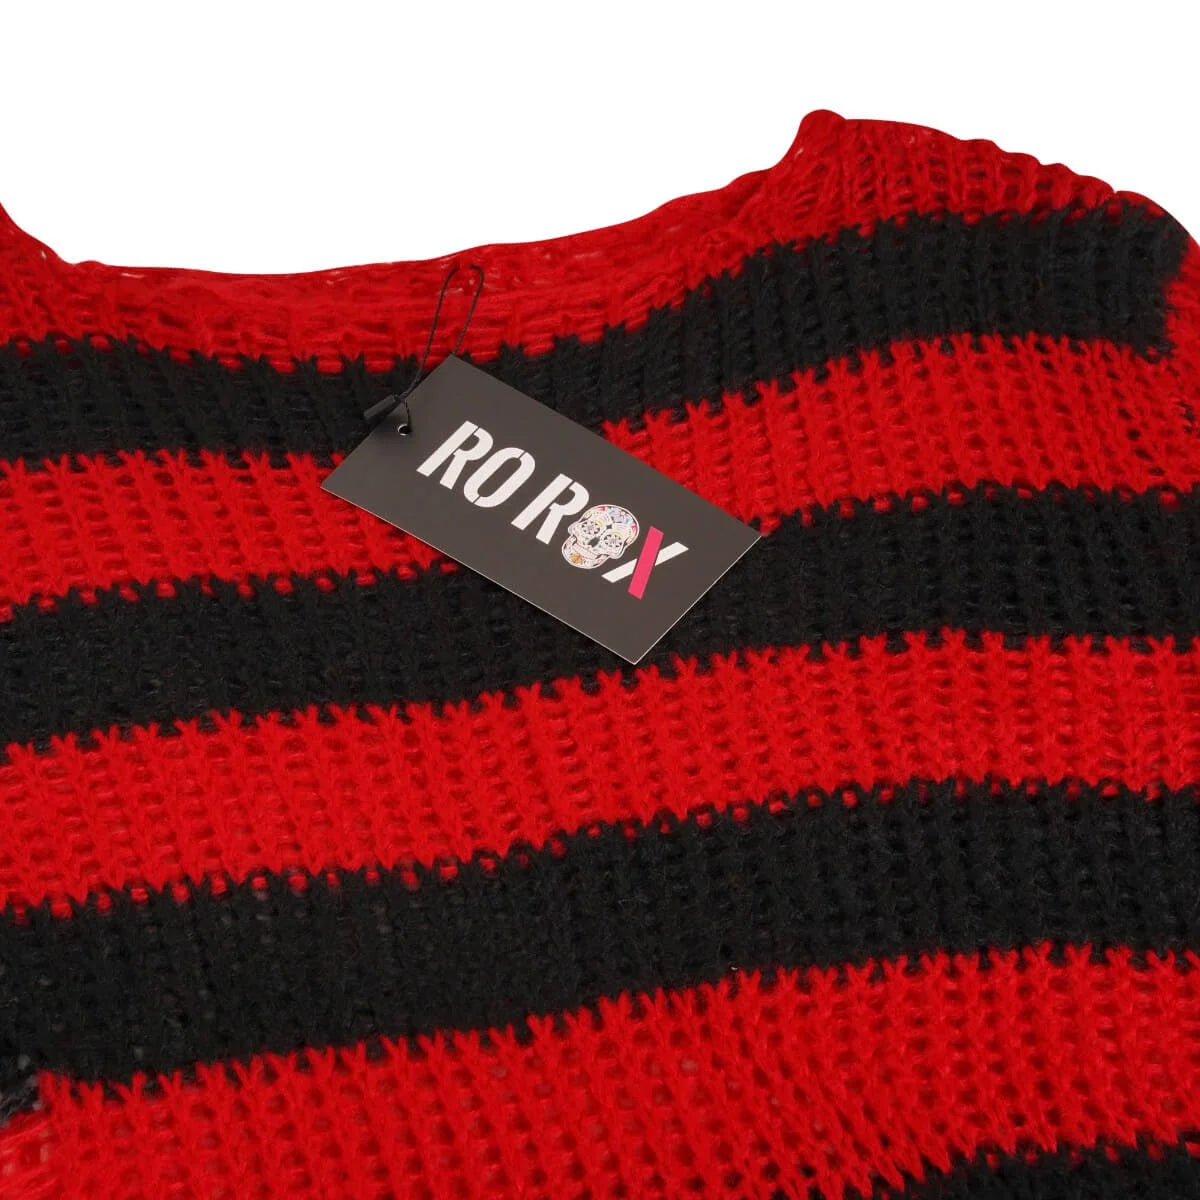 Ro Rox Ryot Oversized Stripe Grunge Distressed Jumper, Red